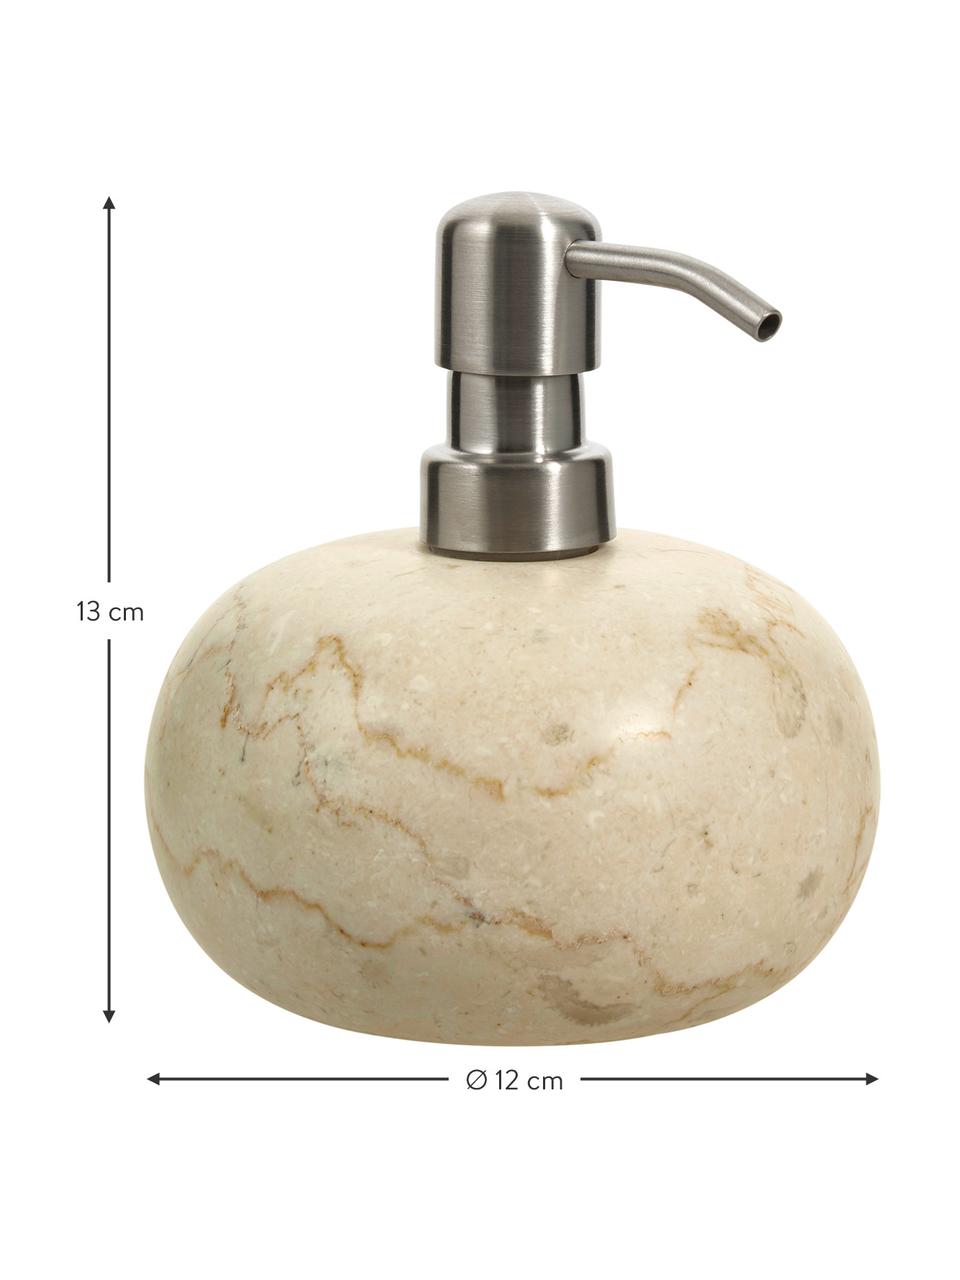 Dosificador de jabón de mármol Luxor, Recipiente: mármol, Dosificador: acero inoxidable, Mármol beige, plateado, Ø 12 x Al 13 cm